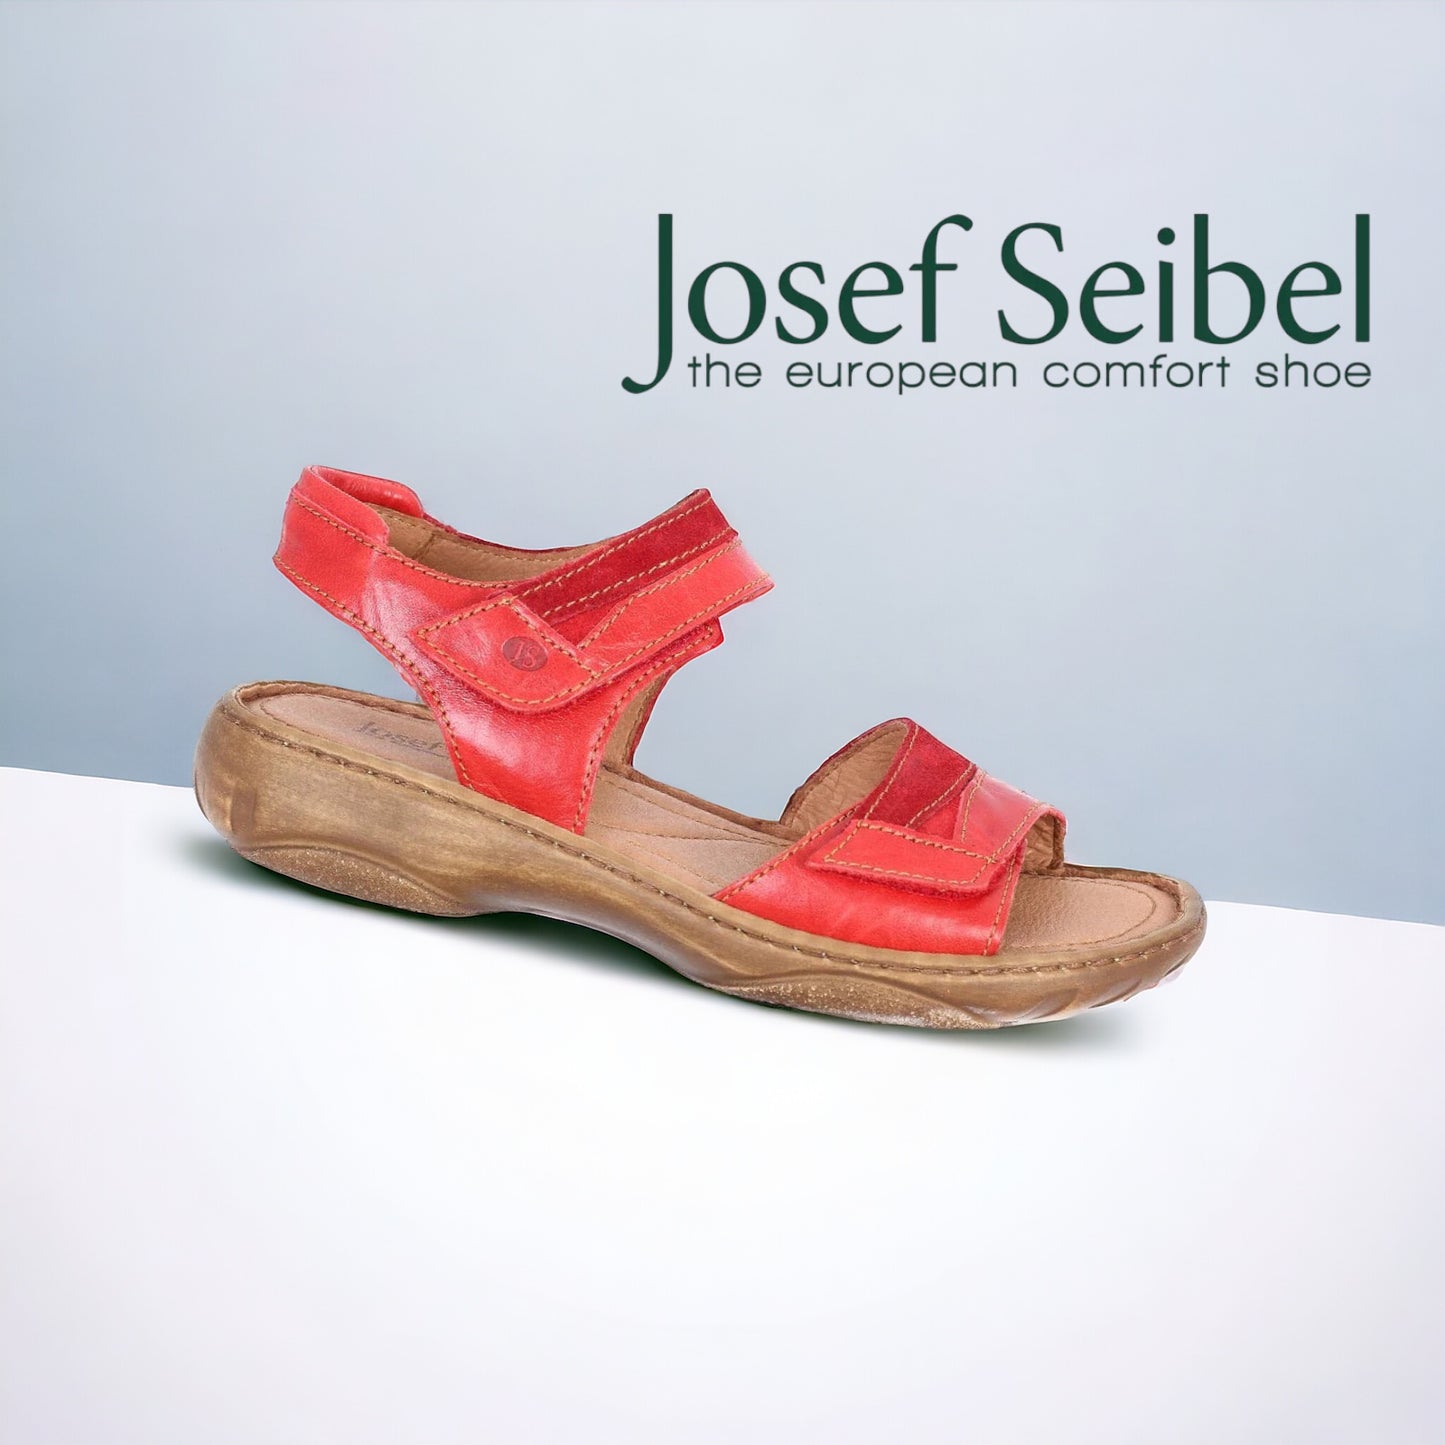 Josef Seibel Debra 19 red sandal